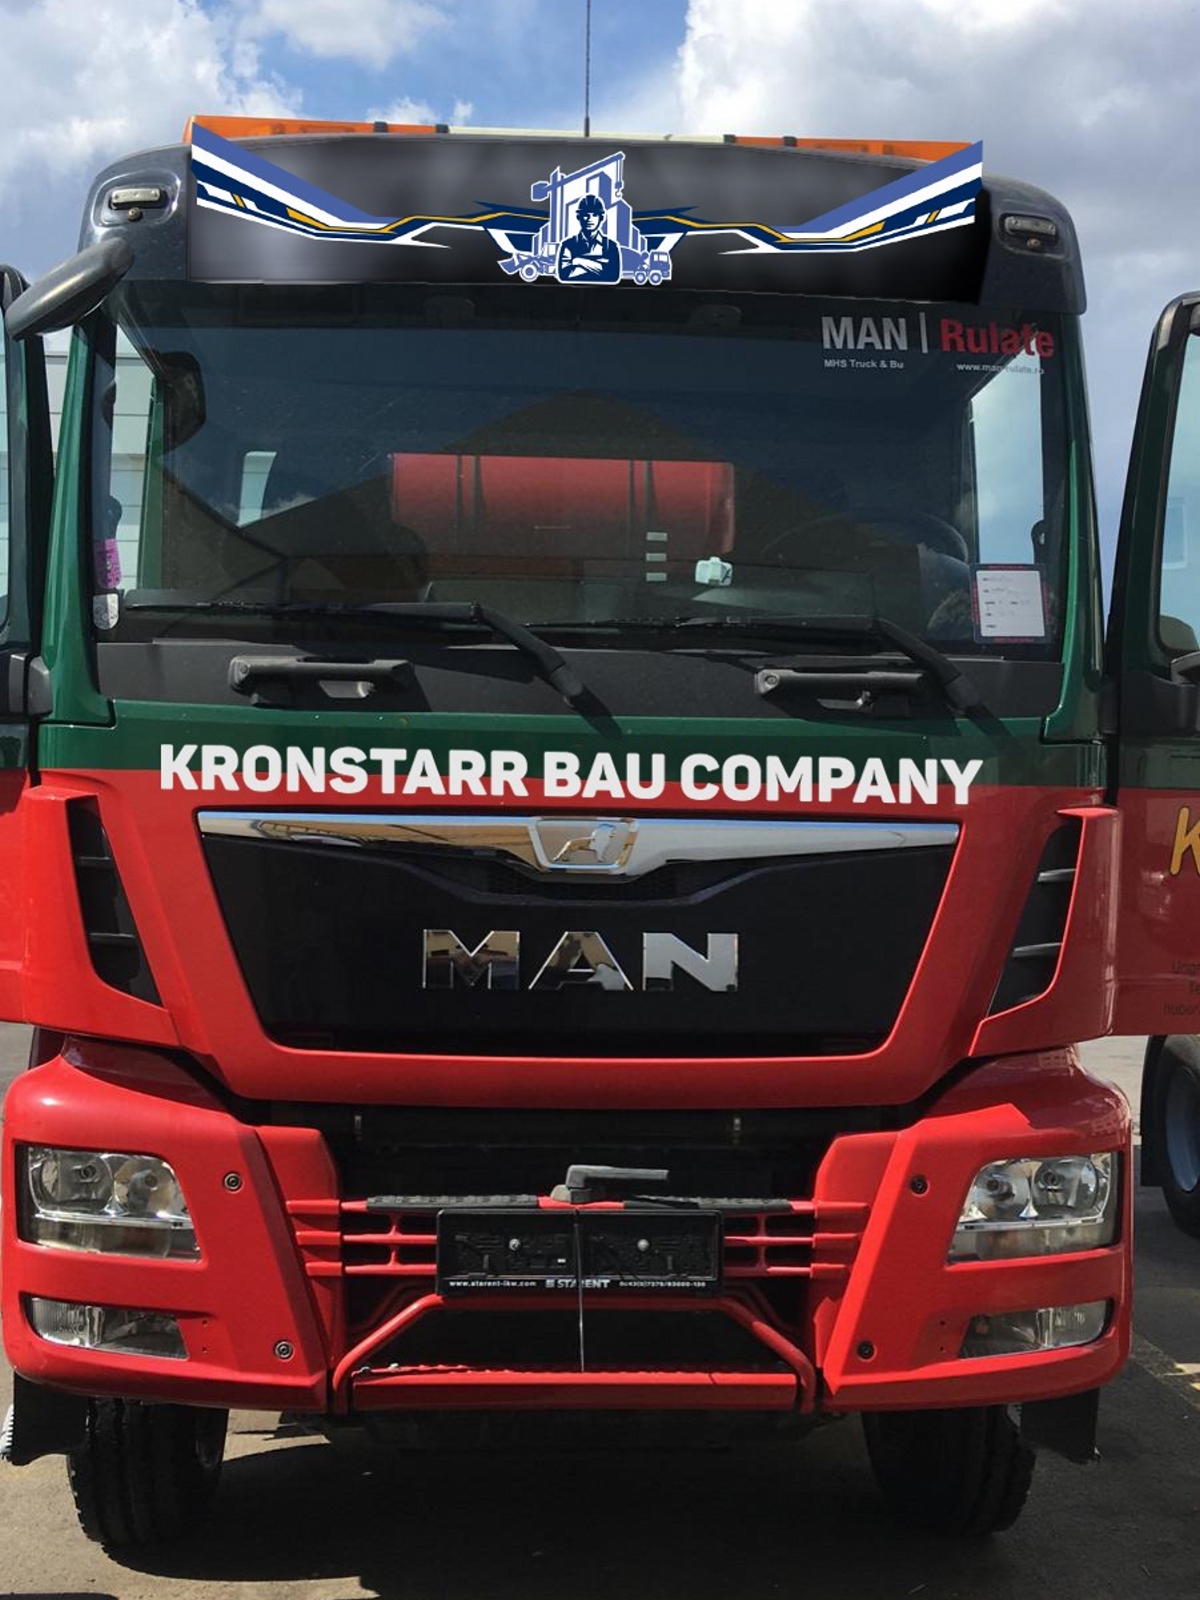 KronstarrBau Company